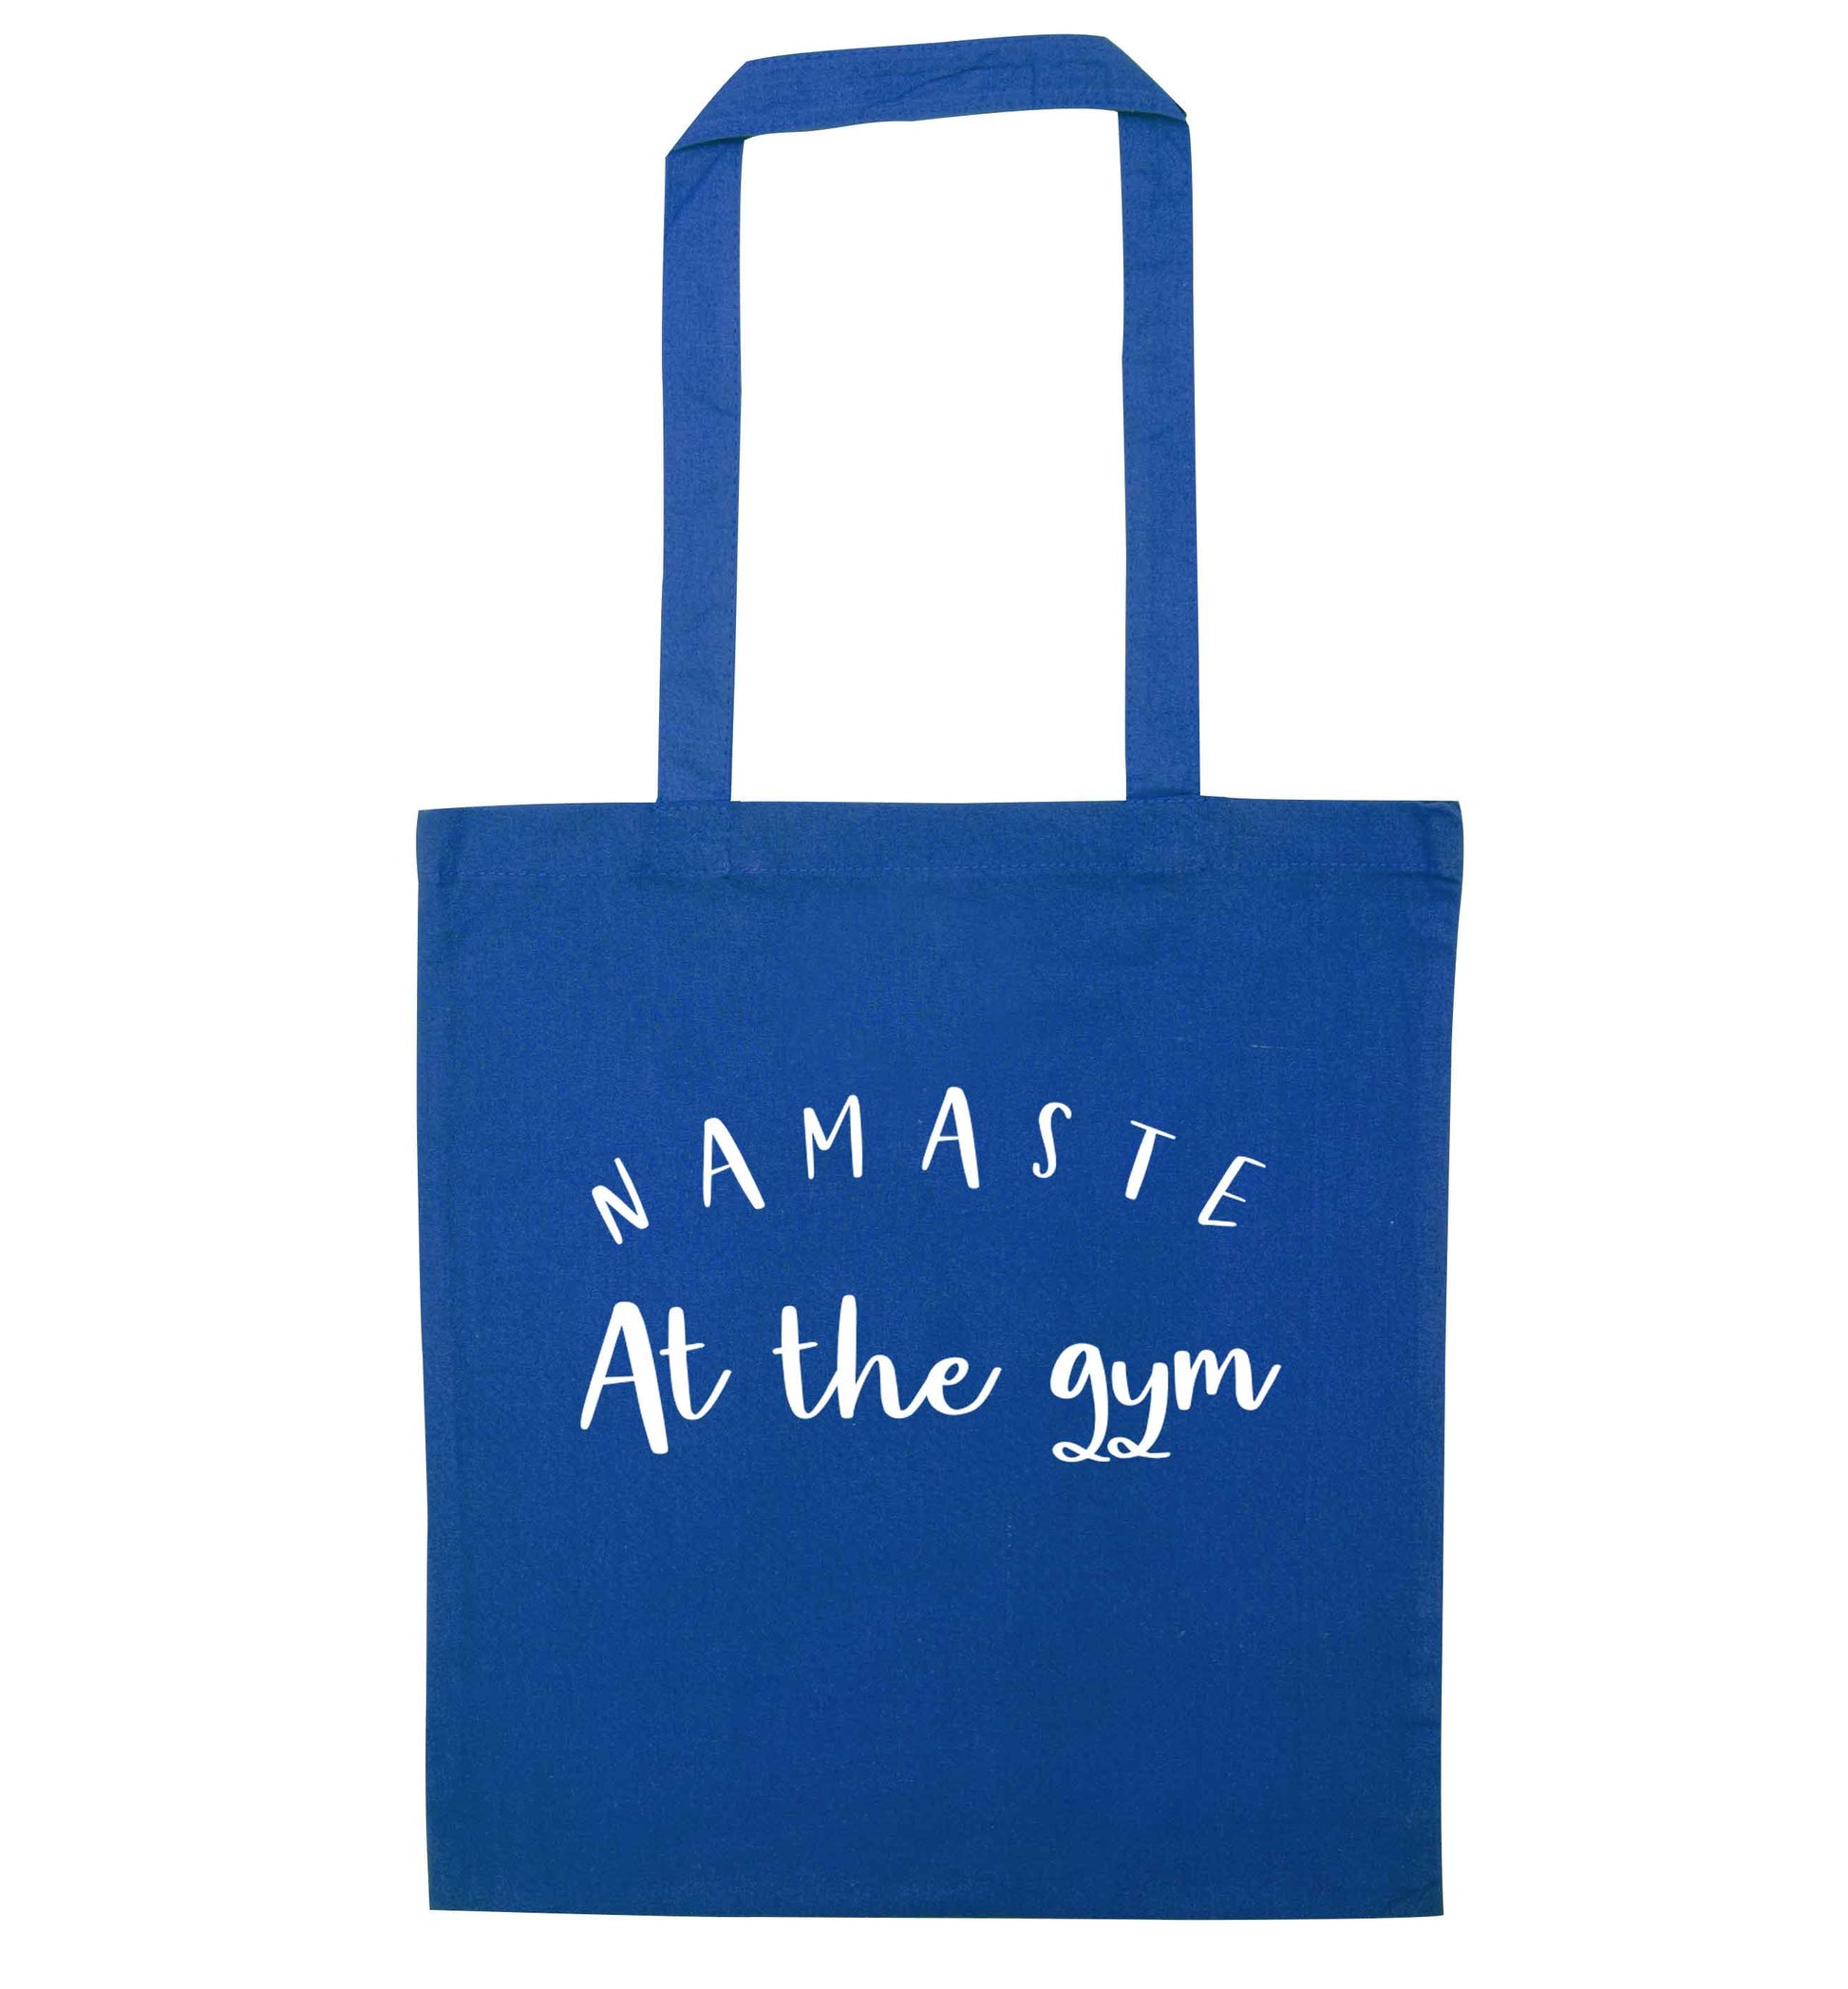 Namaste at the gym blue tote bag